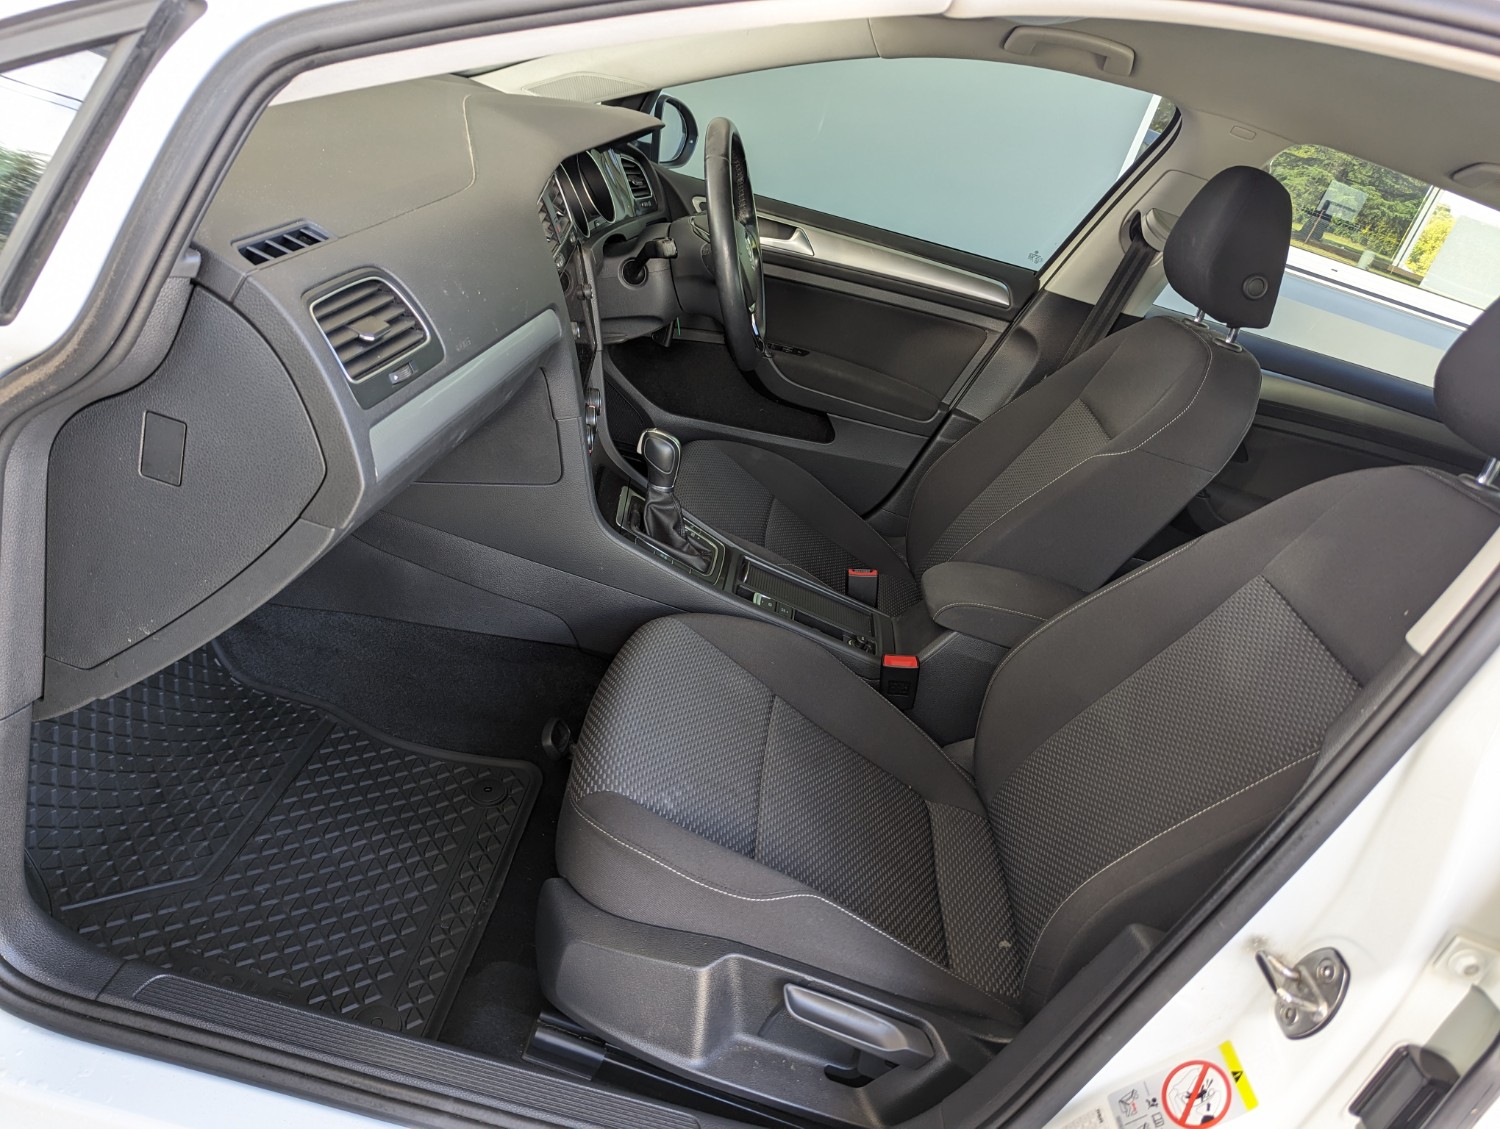 2018 Volkswagen Golf 7.5 110TSI Trendline Hatch Image 14